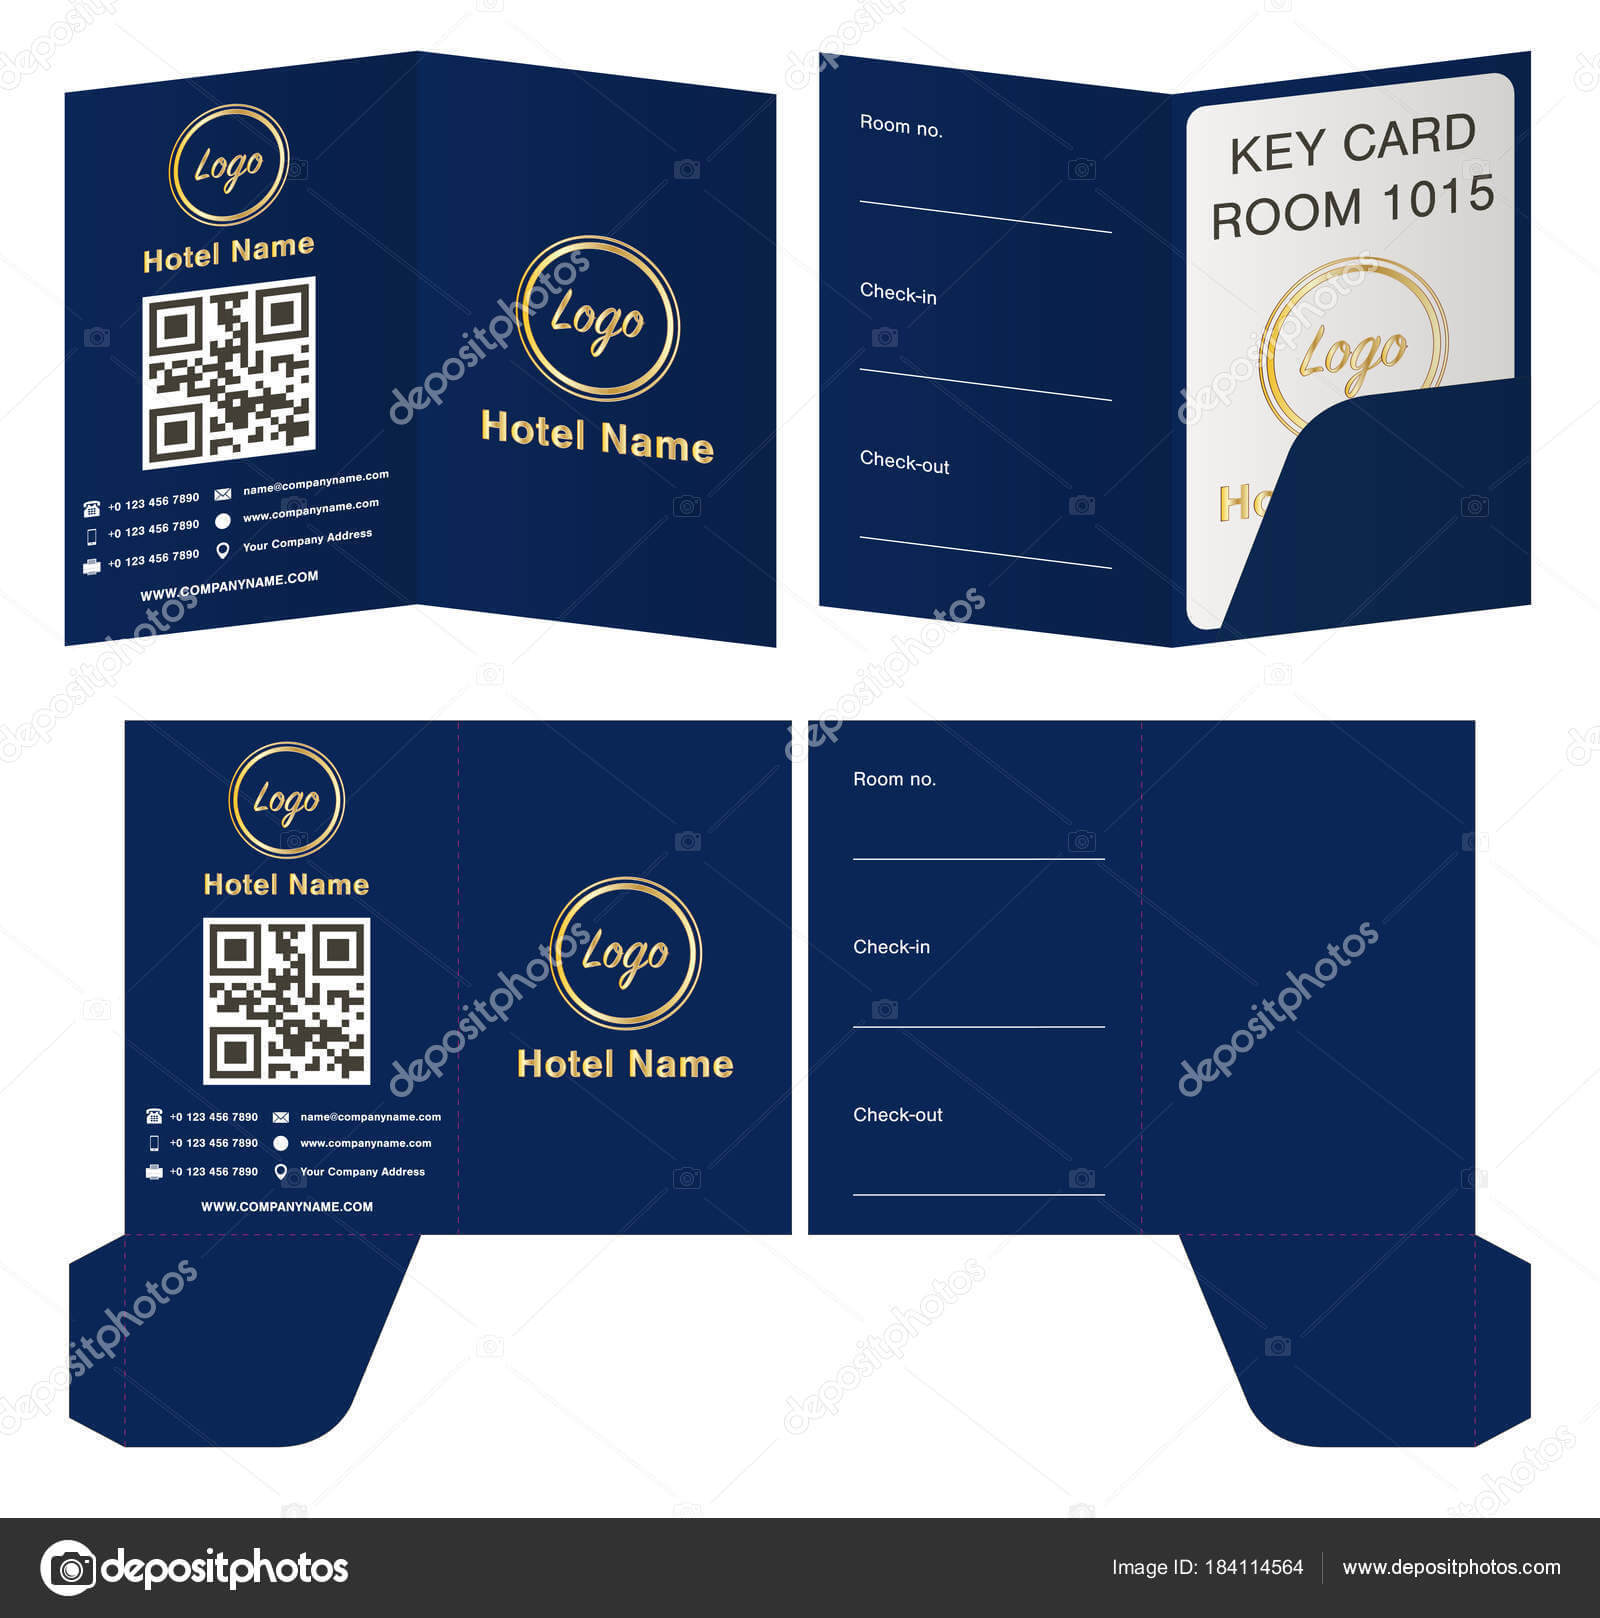 Key Card Holder Template | Hotel Key Card Holder Folder Intended For Hotel Key Card Template